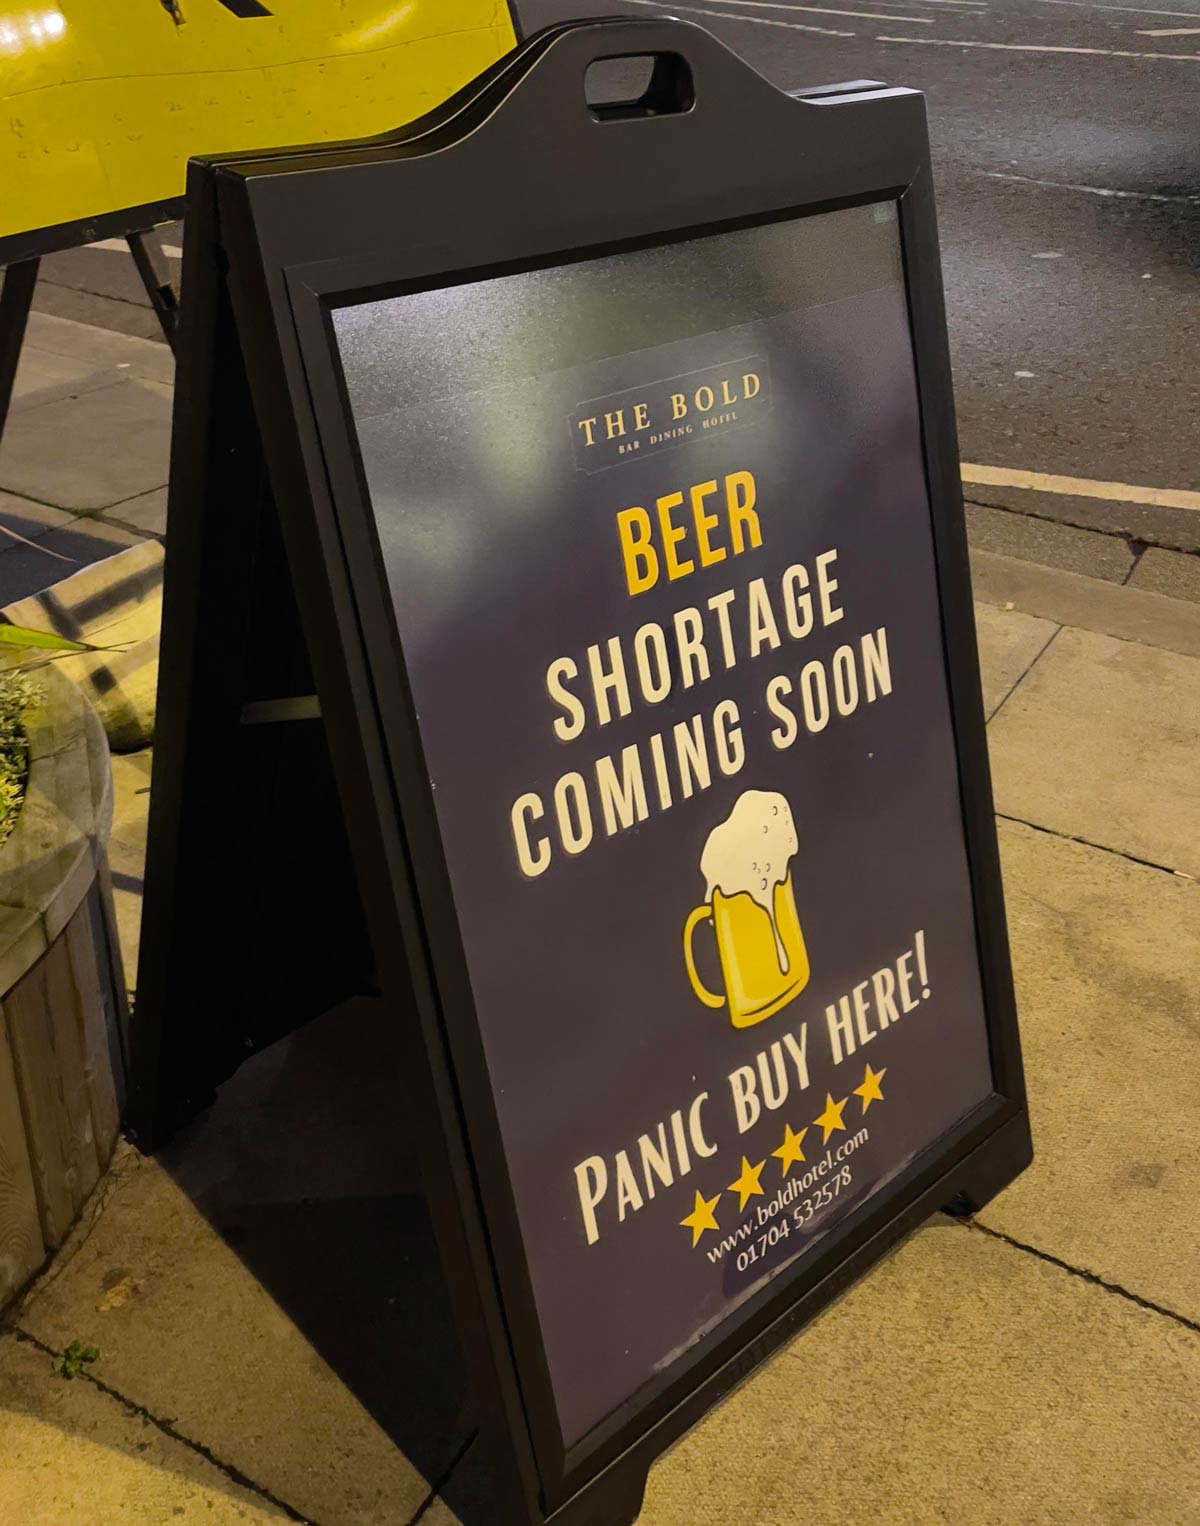 Beer shortage coming soon!